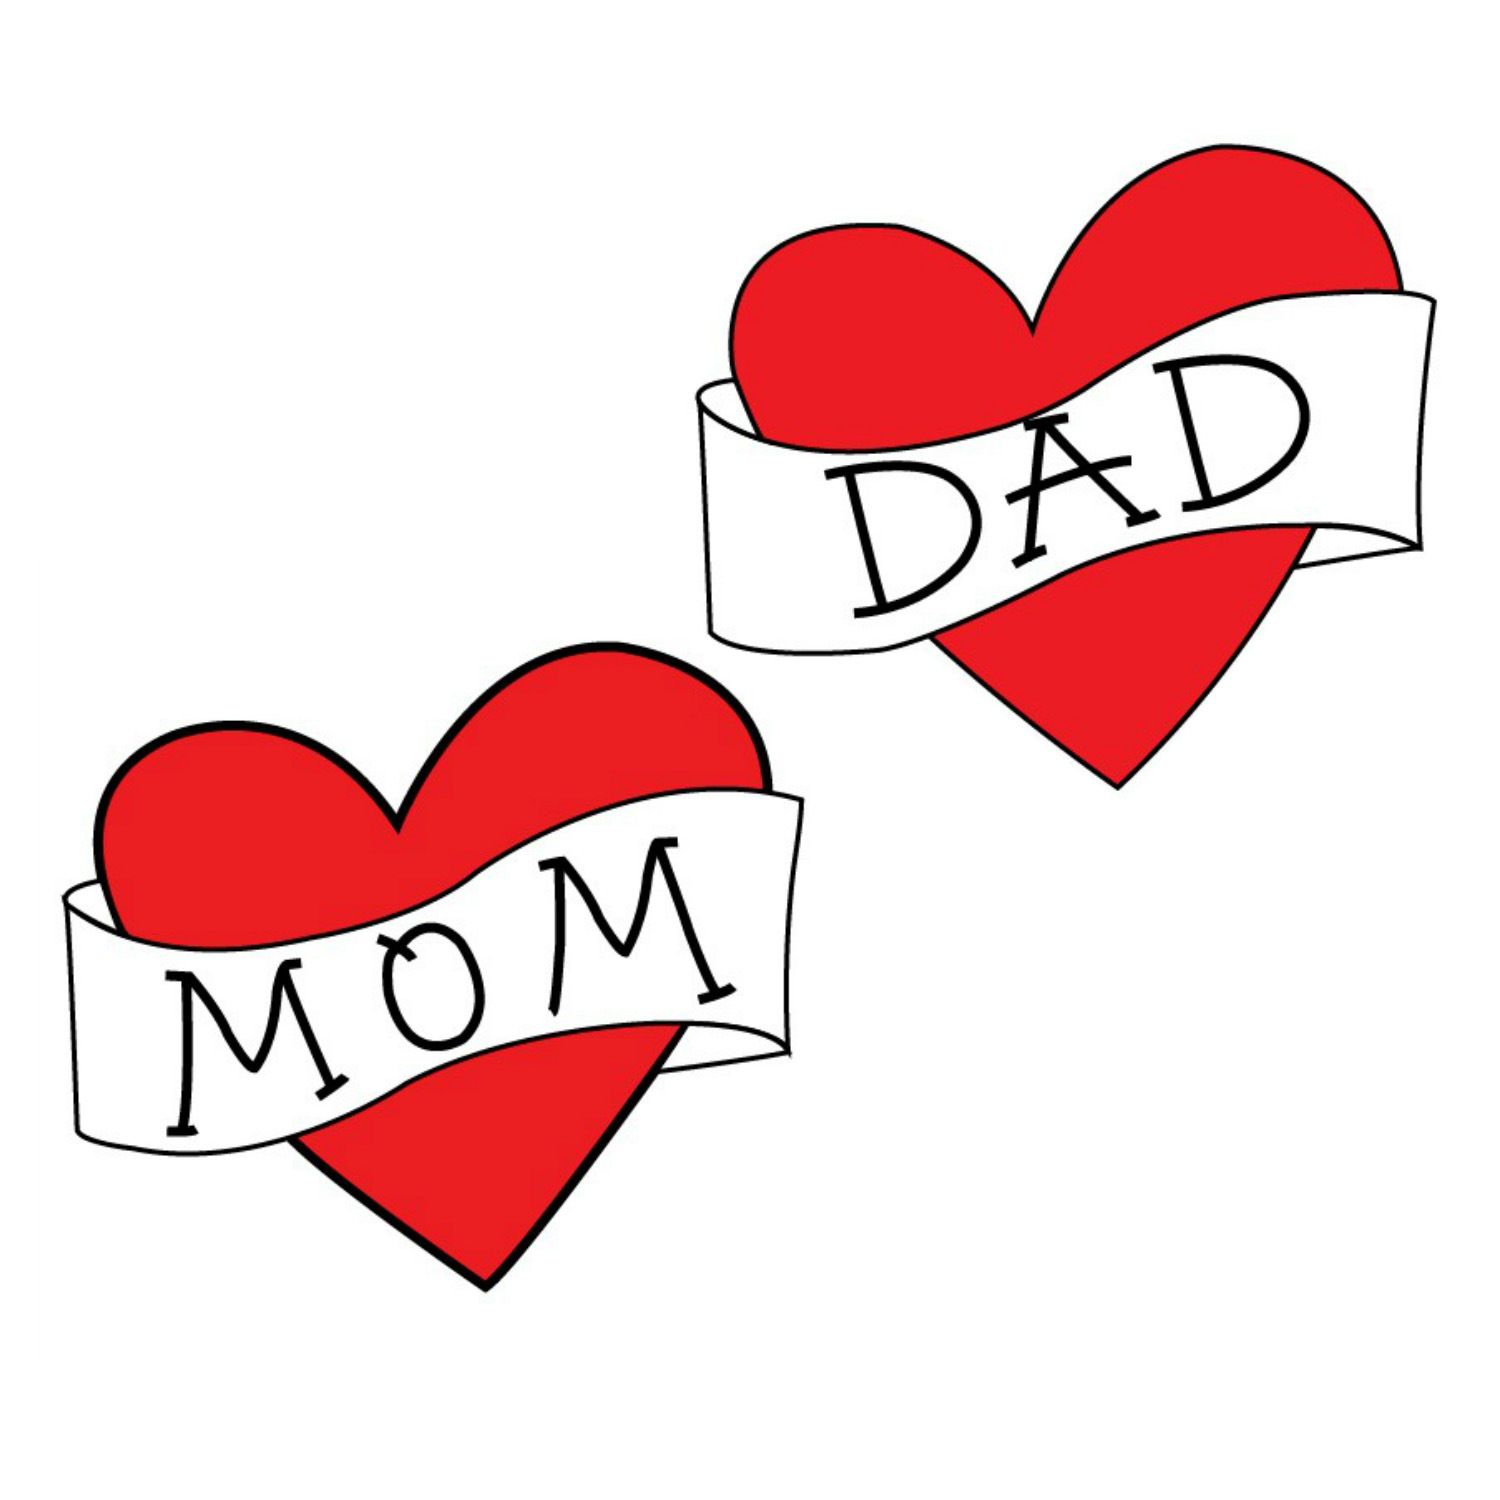 MOM DAD Loving Heart Tattoo Stickers  12pcs/lot Baby Kids cute  waterproof Tattoo Stickers 2019 ins hot family new accessory